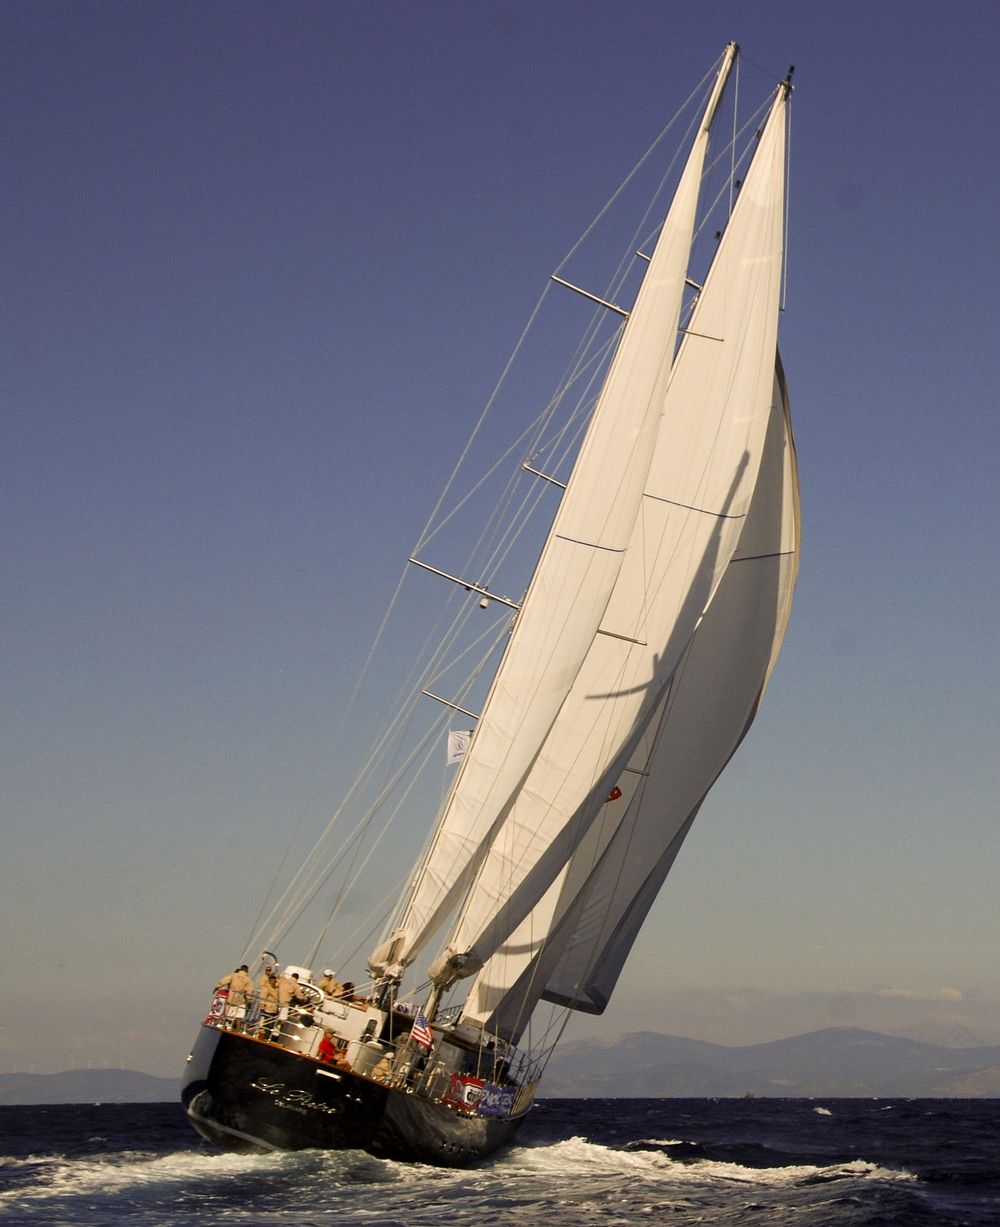 Free sailboat in the sea image, public domain CC0 photo.